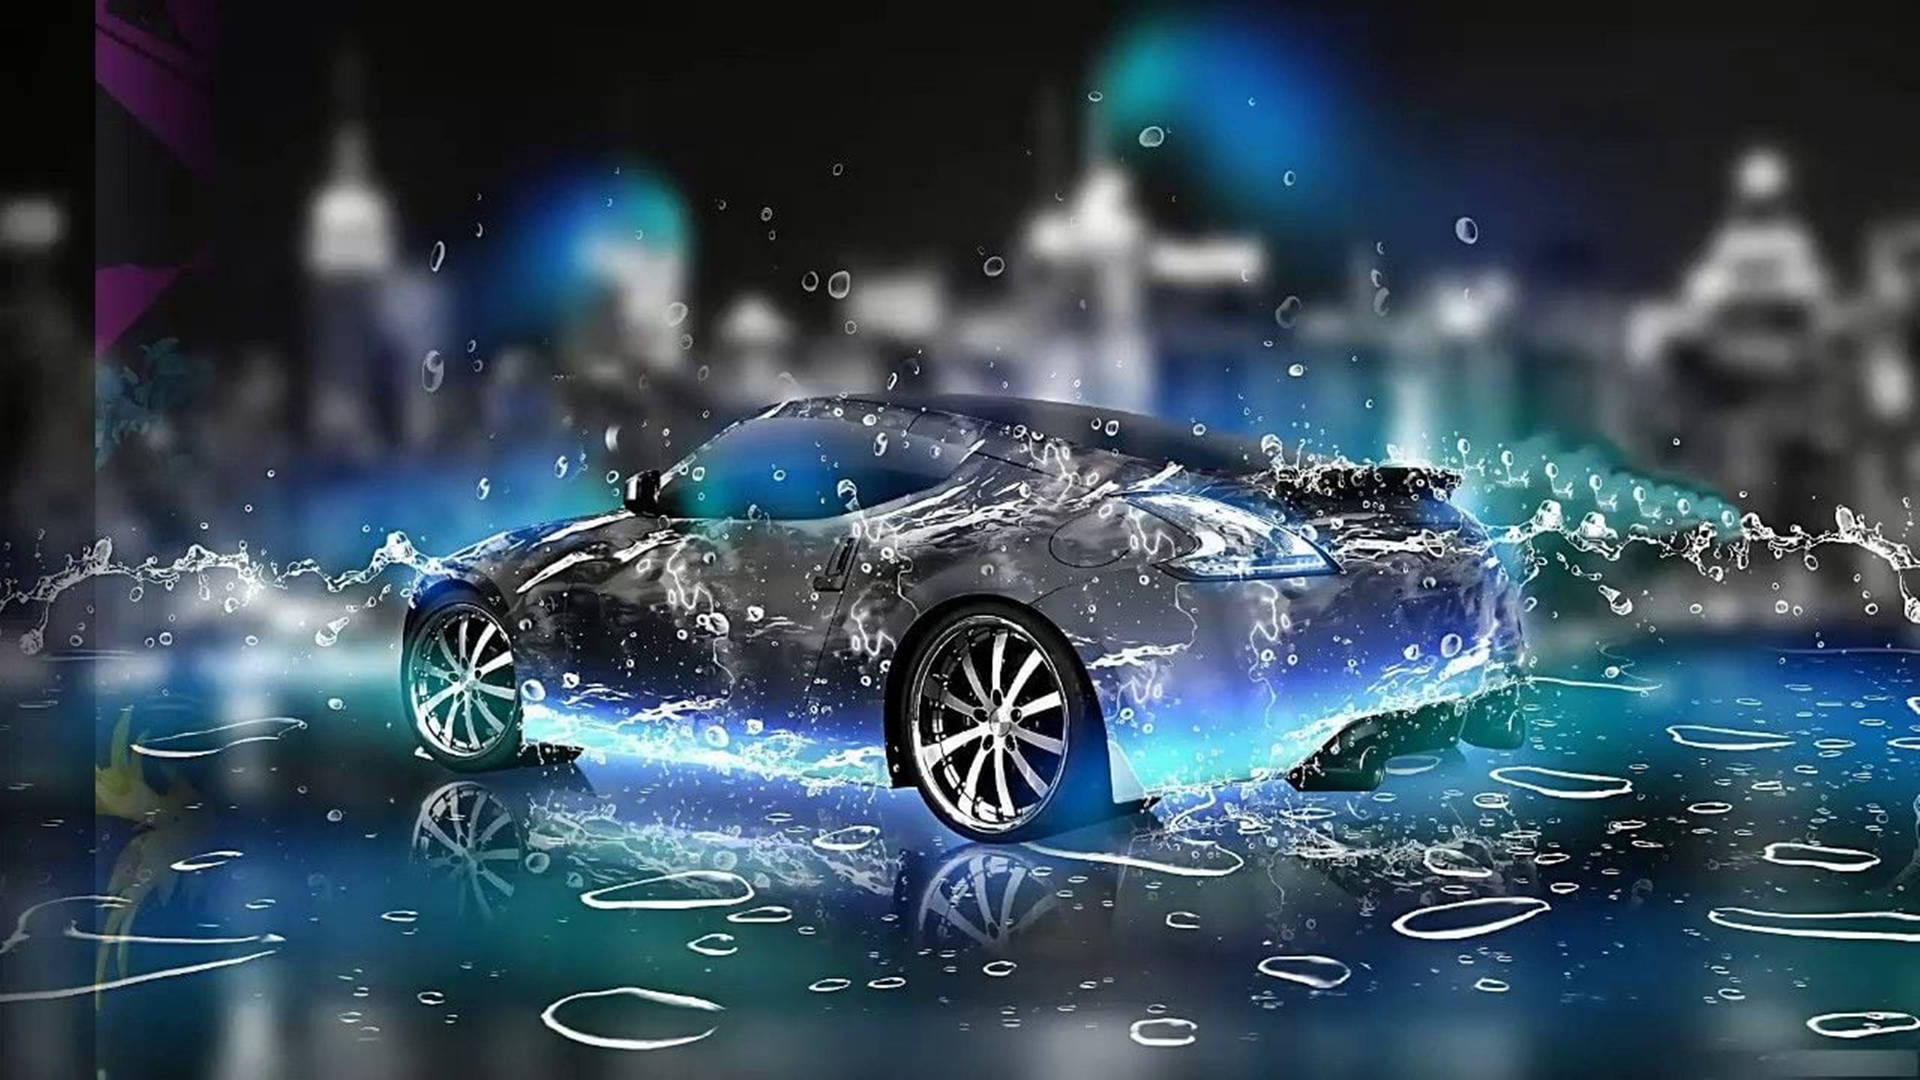 3d Hd Glowing Matchbox Car In The Rain Wallpaper